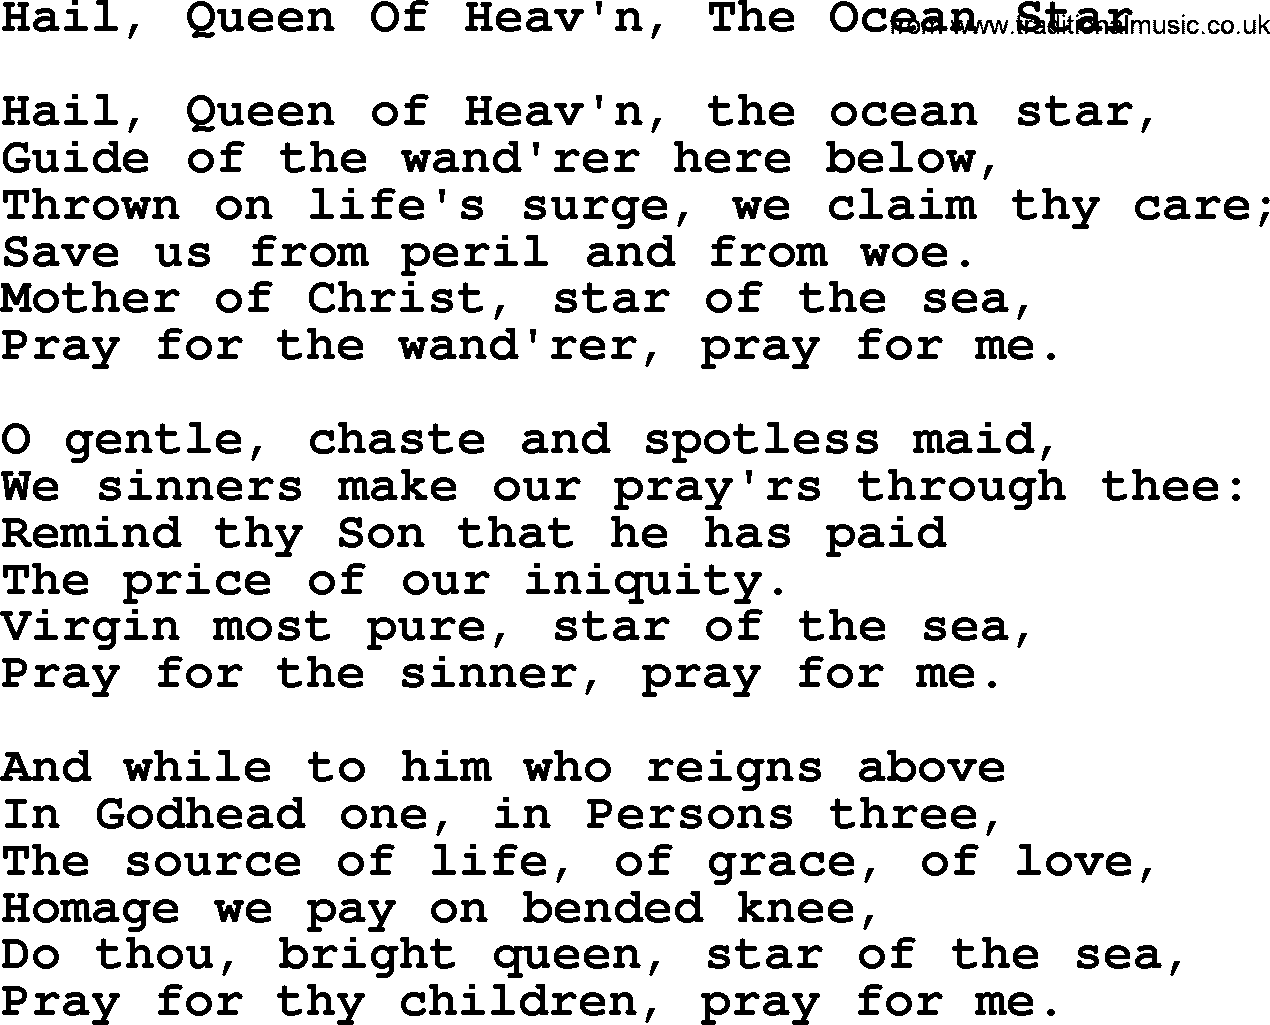 Catholic Hymn: Hail, Queen Of Heav'n, The Ocean Star lyrics with PDF